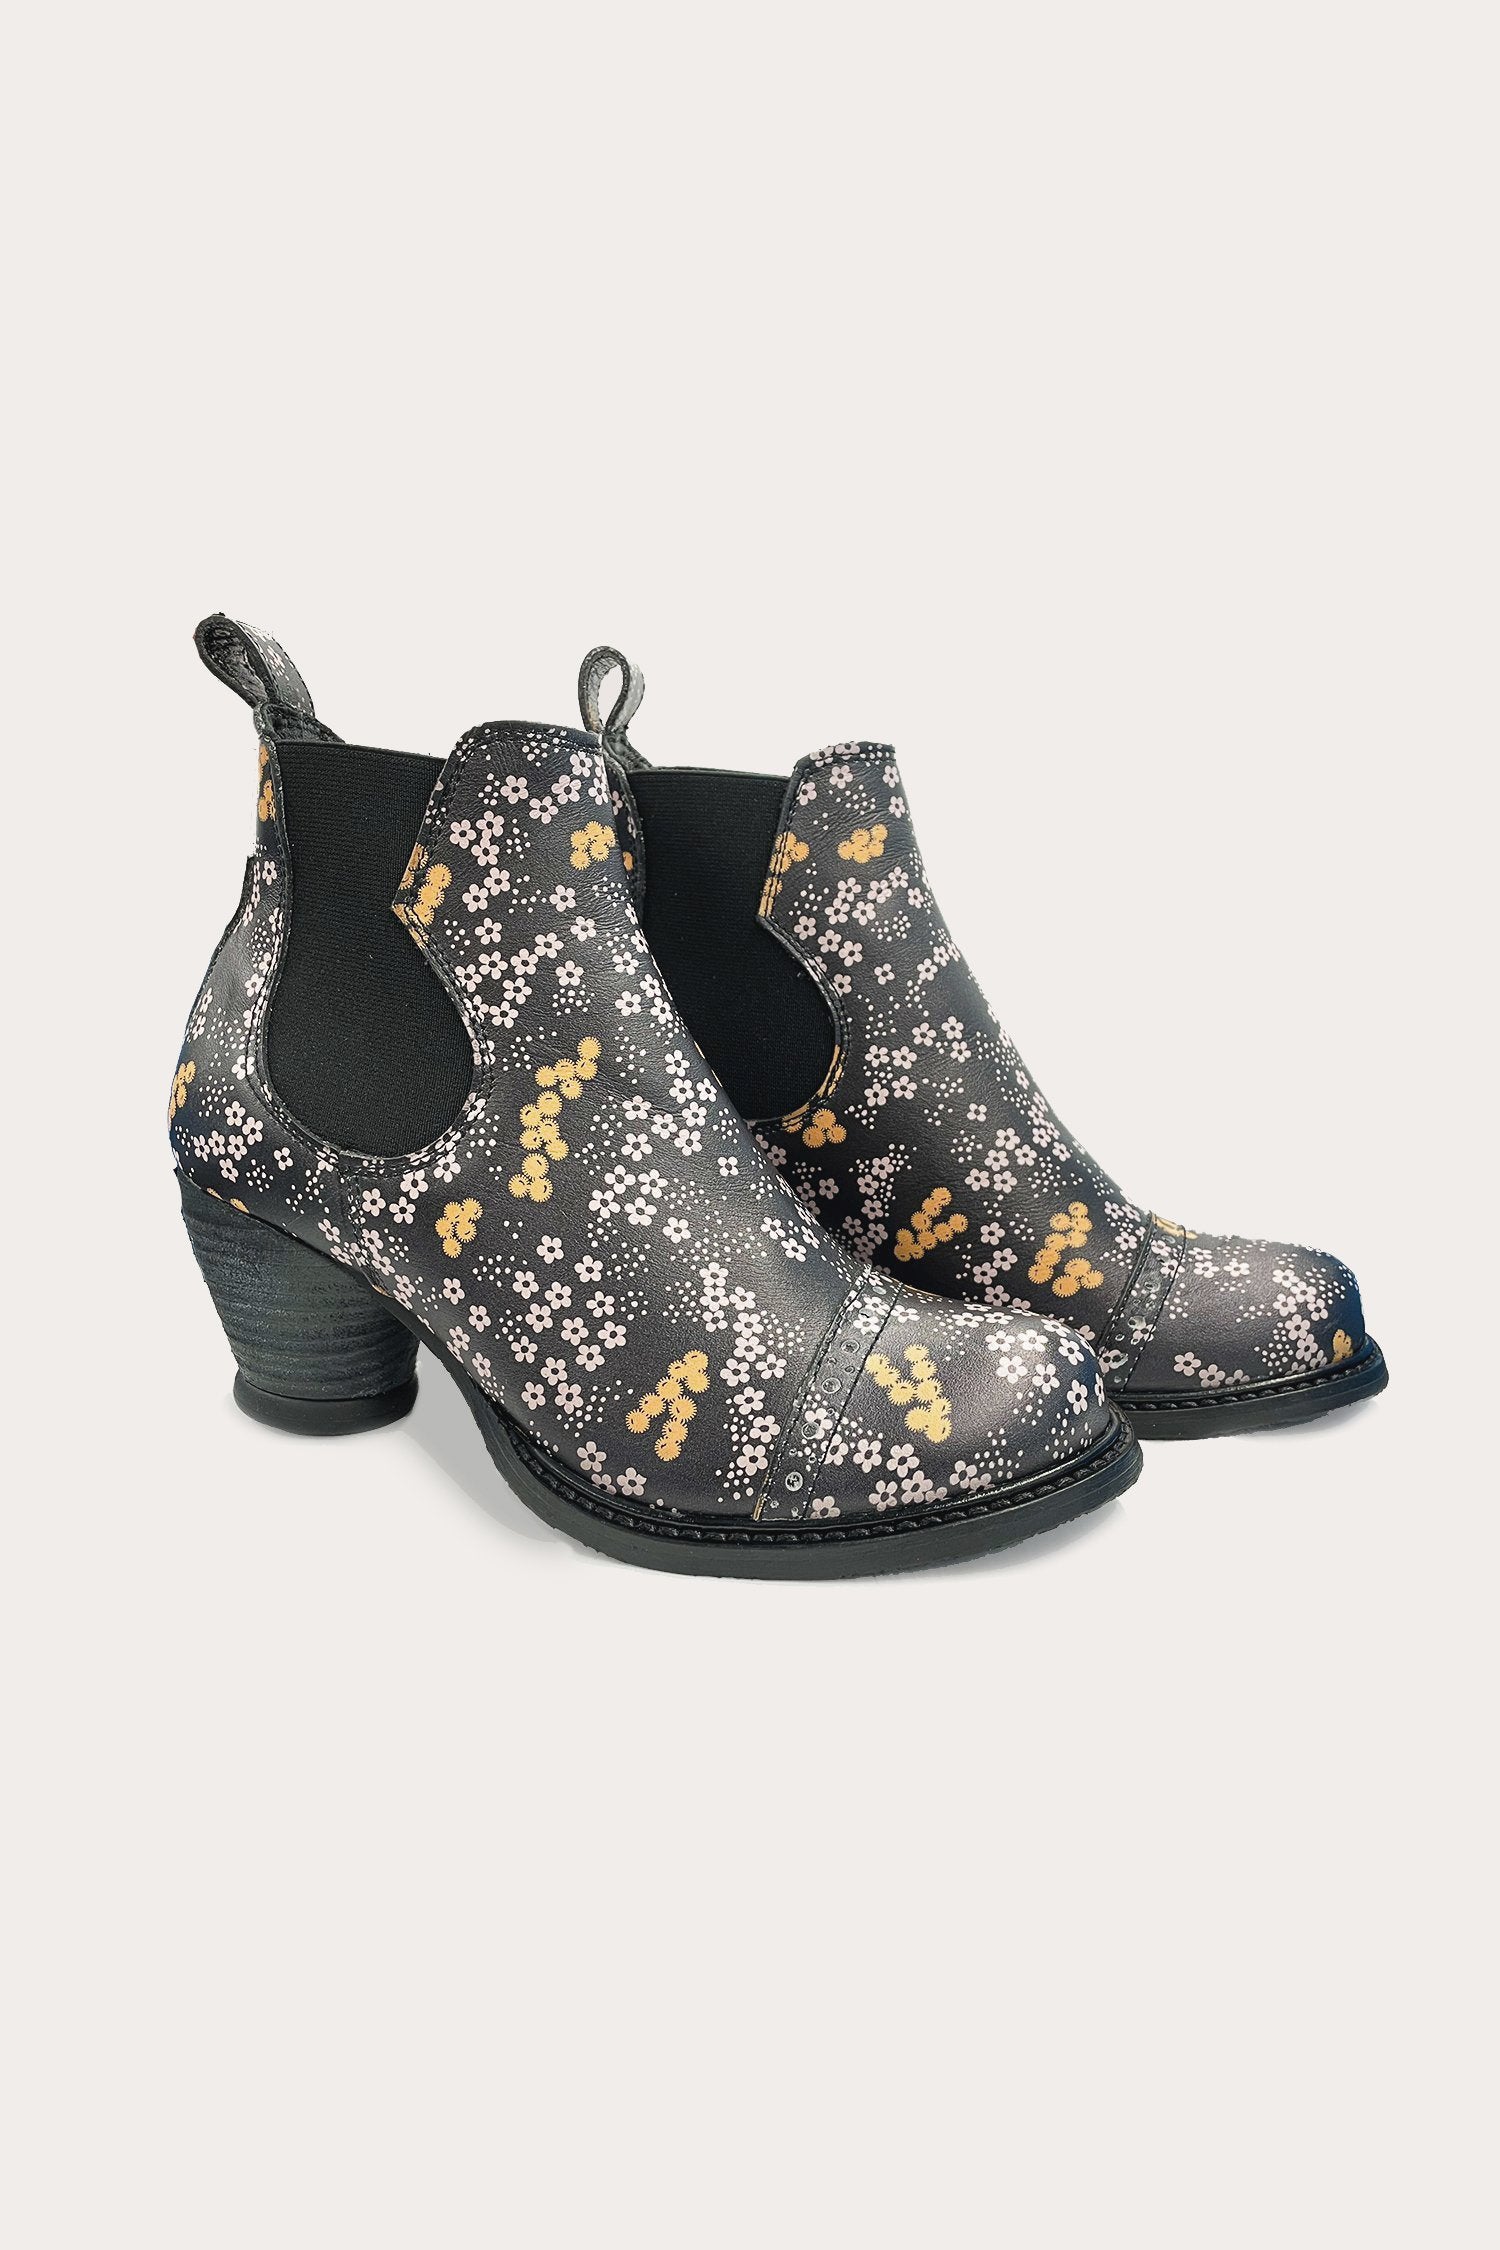 Anna Sui x John Fluevog <br> Ditsy Blooms Chelsea Boot in Black - Anna Sui